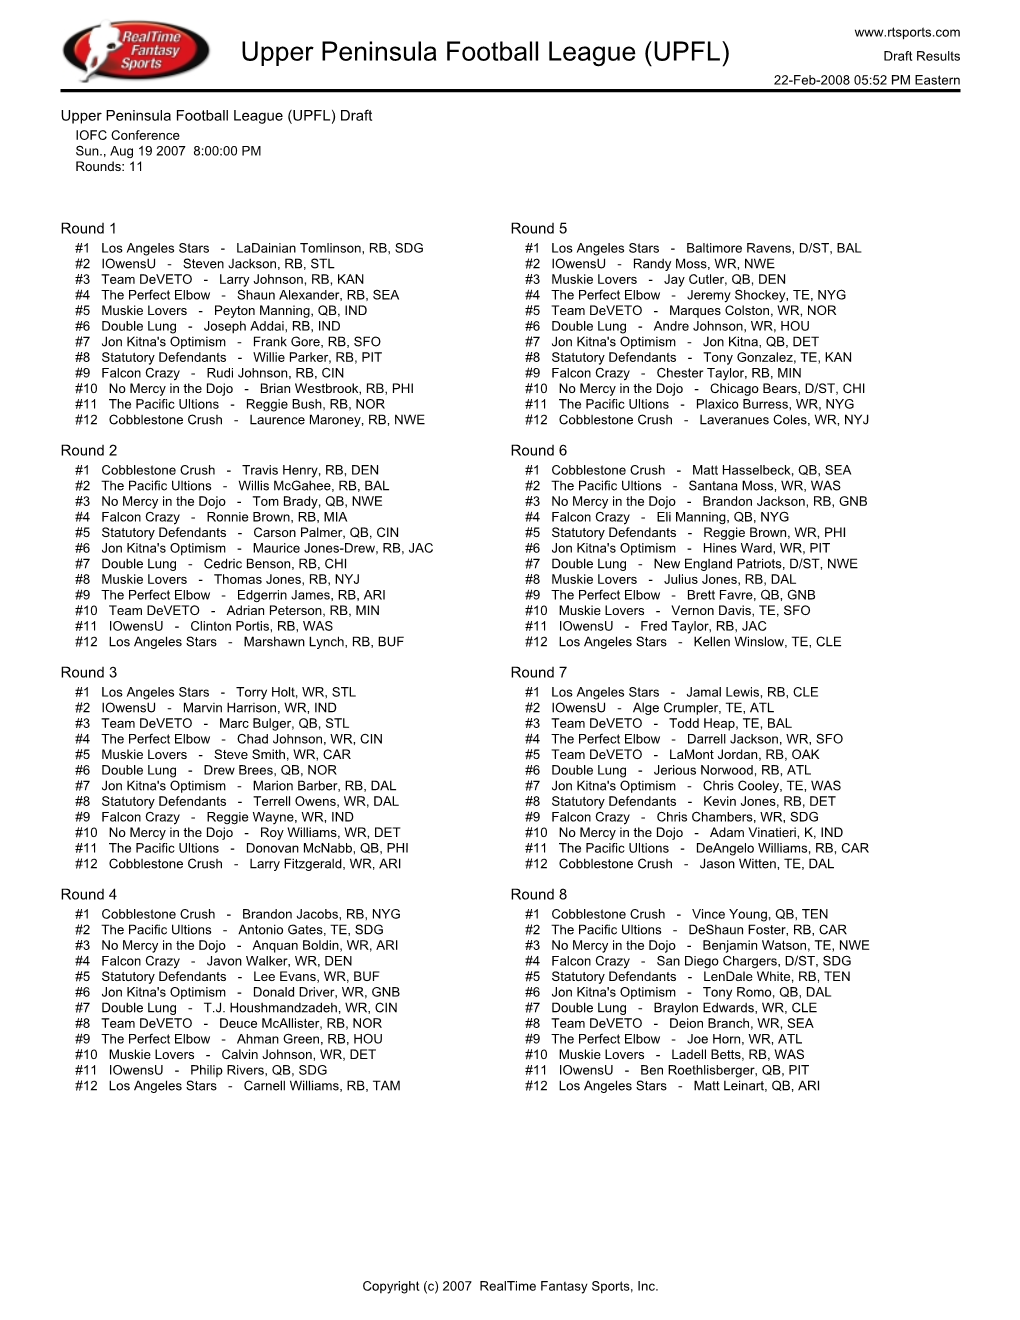 Upper Peninsula Football League (UPFL) Draft Results 22-Feb-2008 05:52 PM Eastern